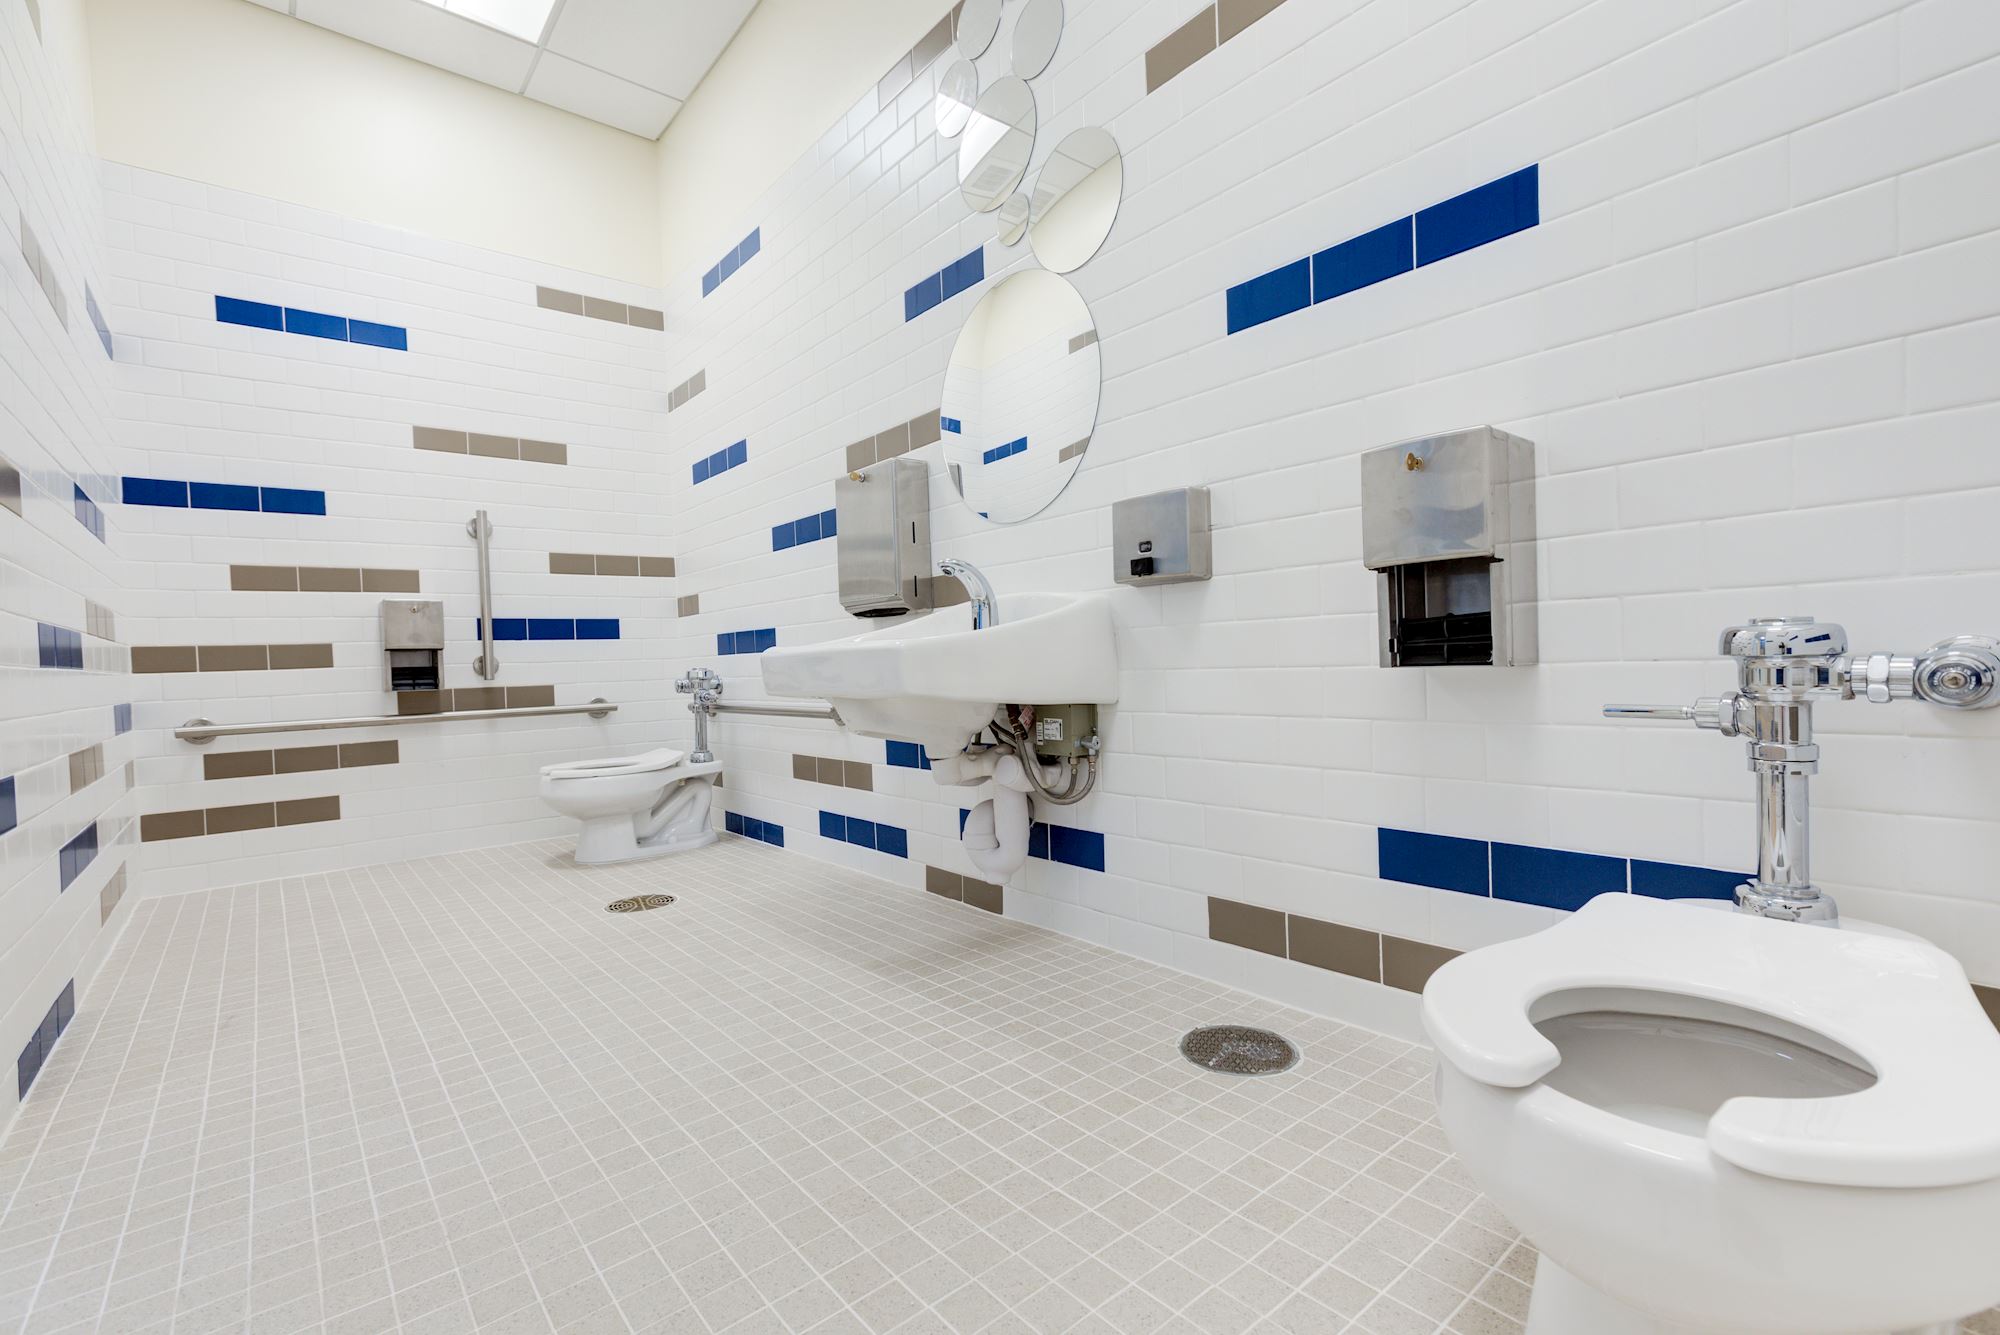 https://www.hrgm.com/wp-content/uploads/2021/11/D4-Ketcham-restroom.jpg